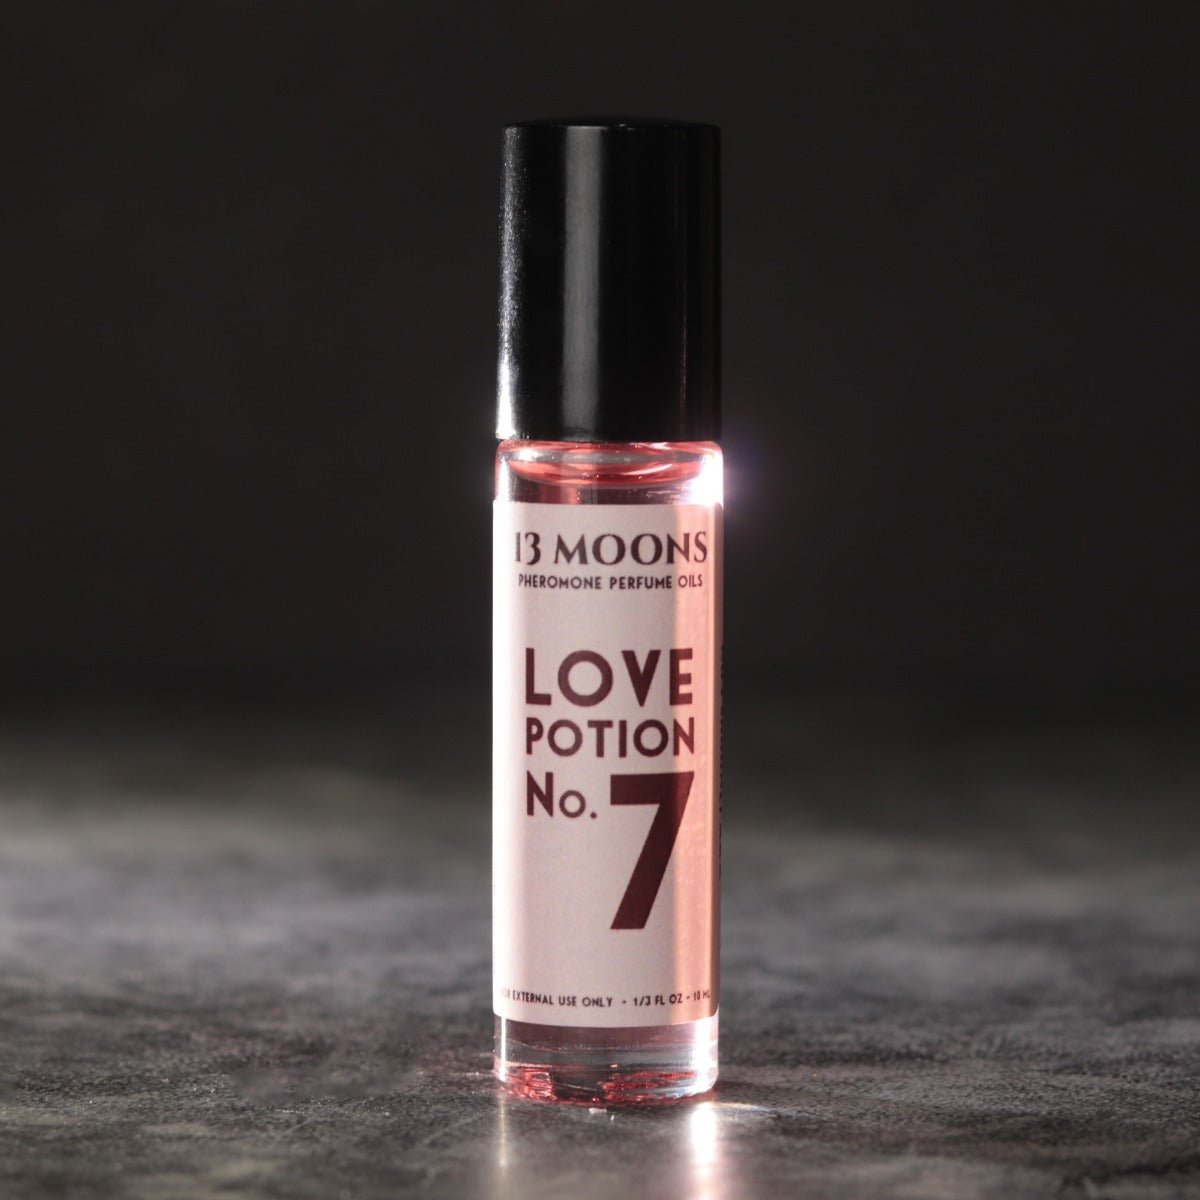 Love Charm Pheromone Infused Perfume Roll-on Oil by 13 Moons